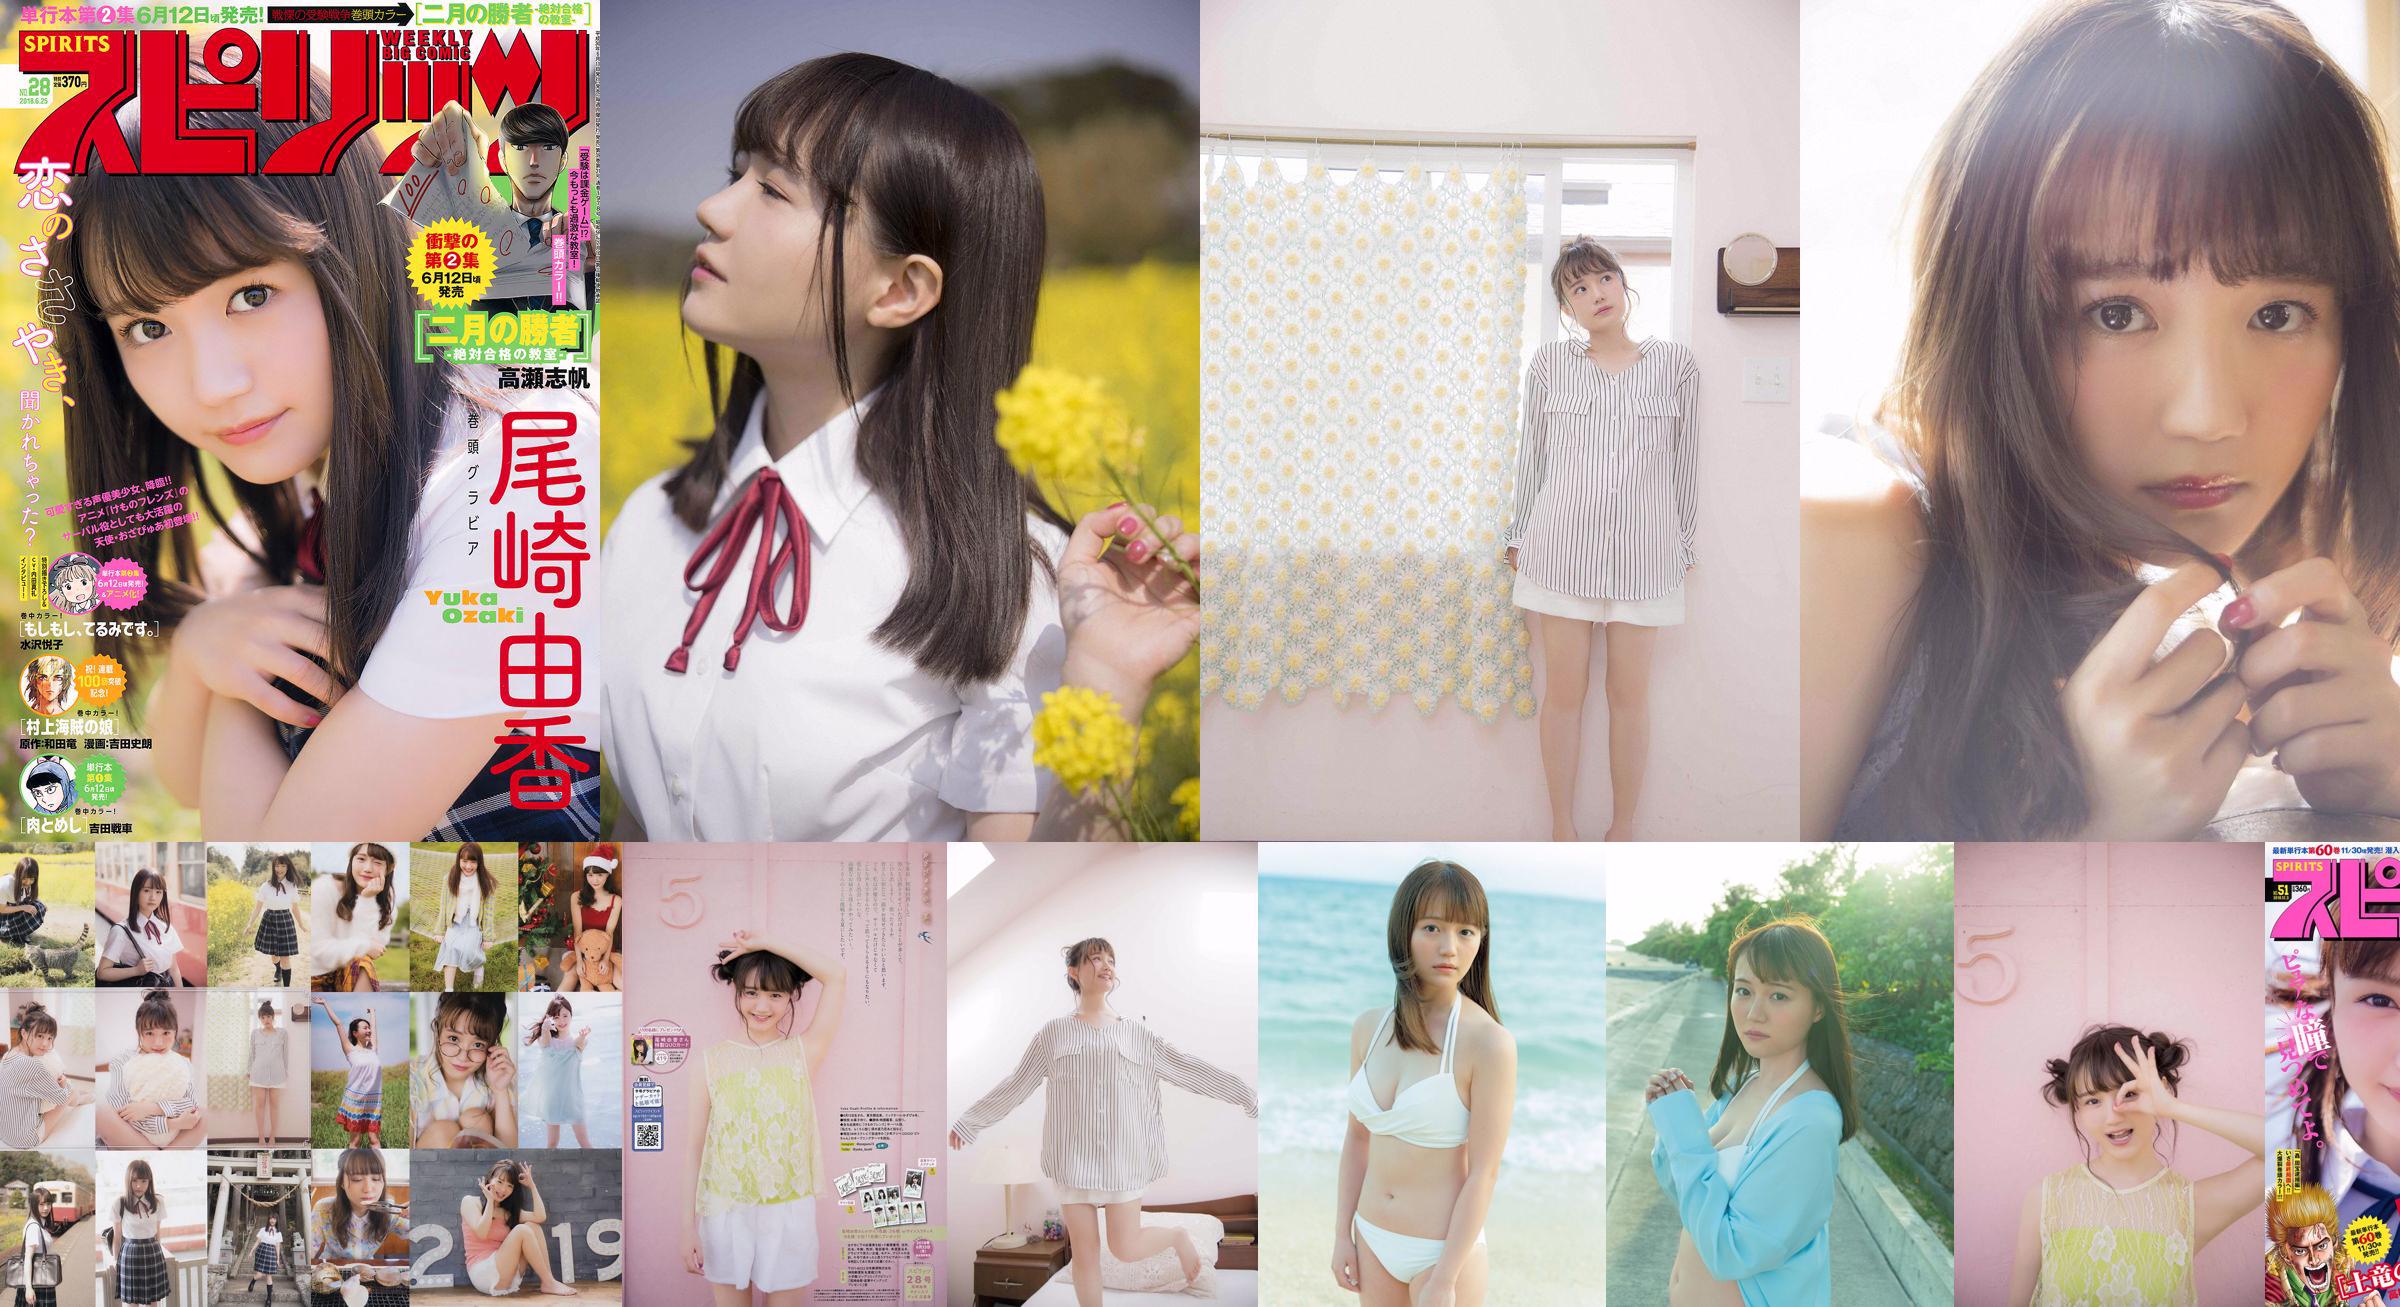 [Weekly Big Comic Spirits] Yuka Ozaki No.51 Photo Magazine en 2018 No.0dd117 Página 1